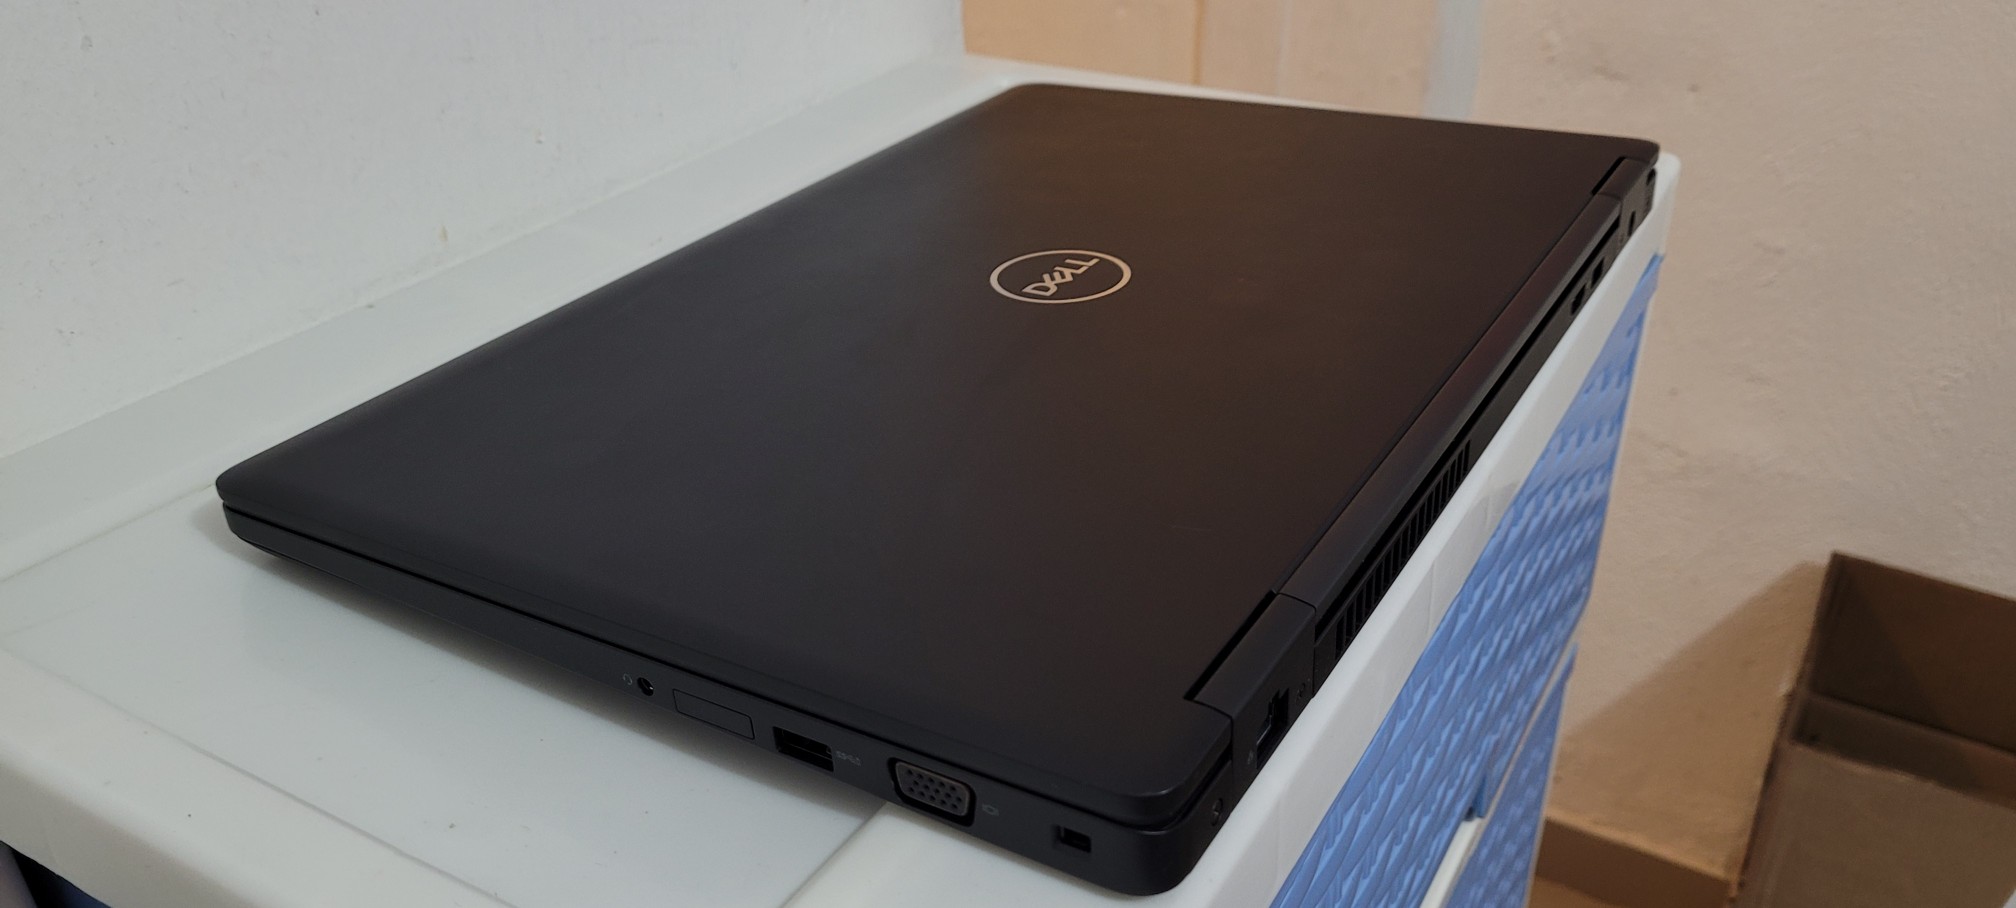 computadoras y laptops - Dell 5580 17 Pulg Core i5 7ma Gen Ram 8gb ddr4 Disco 256gb Nvidea 2gb Dedicada 2